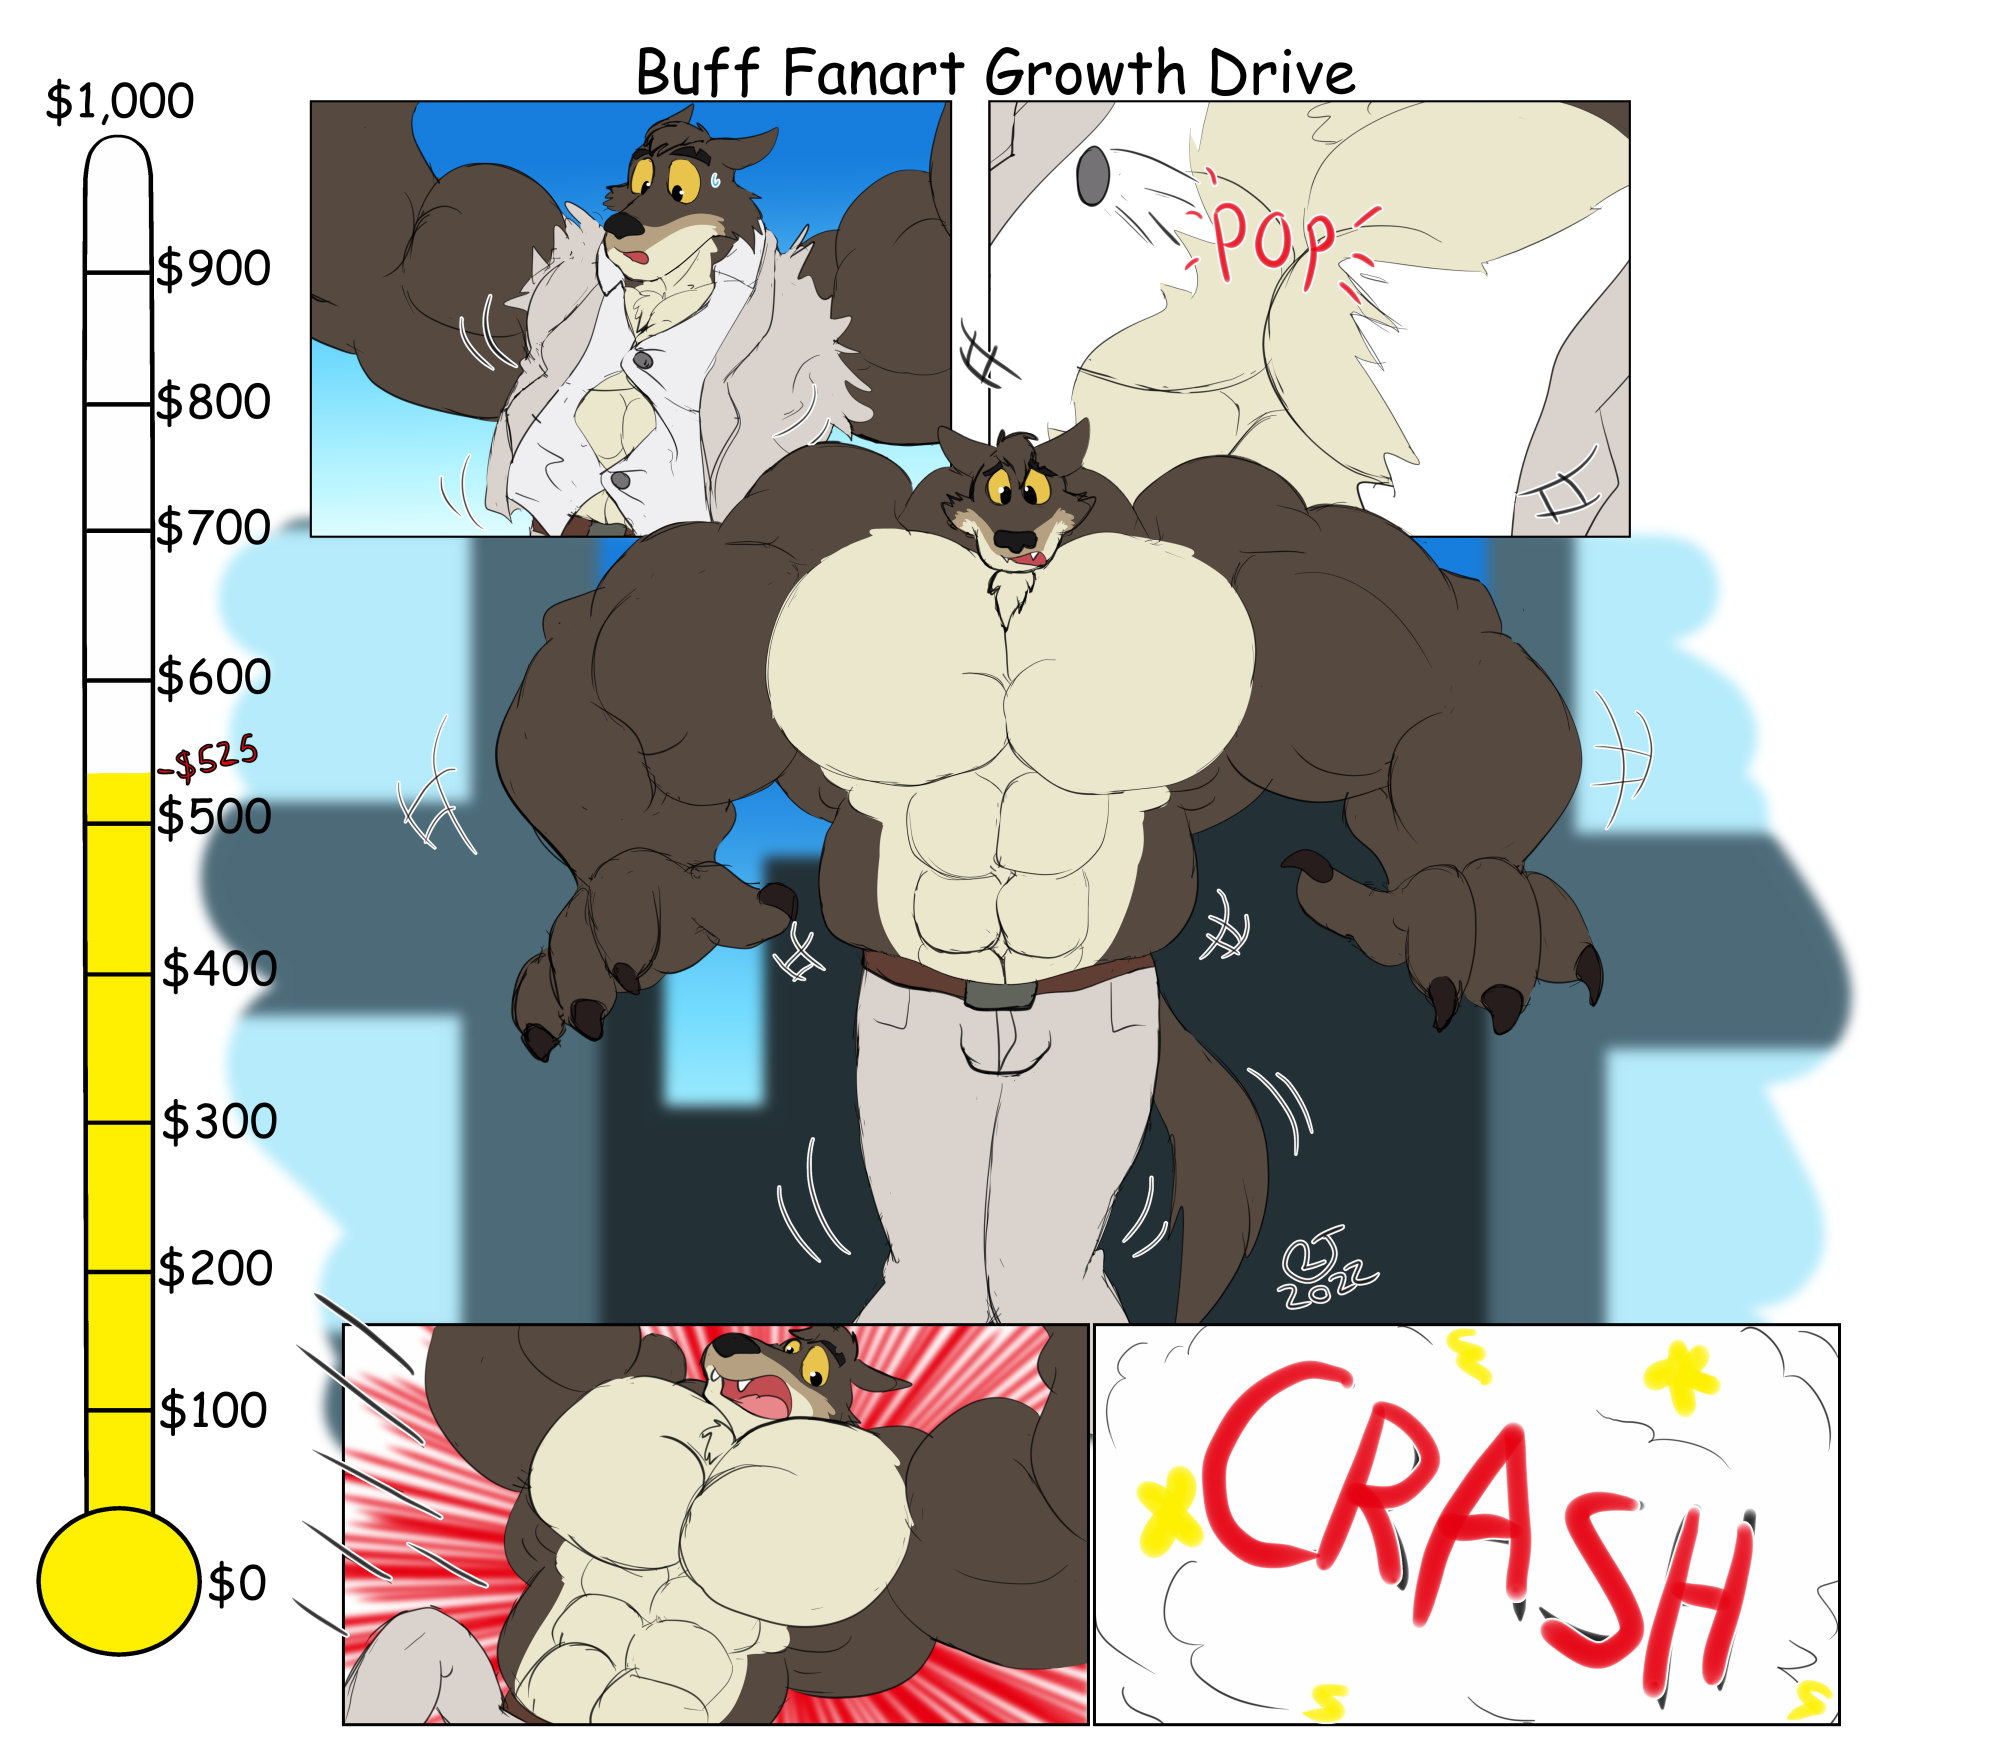 Buff Fanart Growth Drive: Mr. Wolf $525 by CaseyLJones, visual art